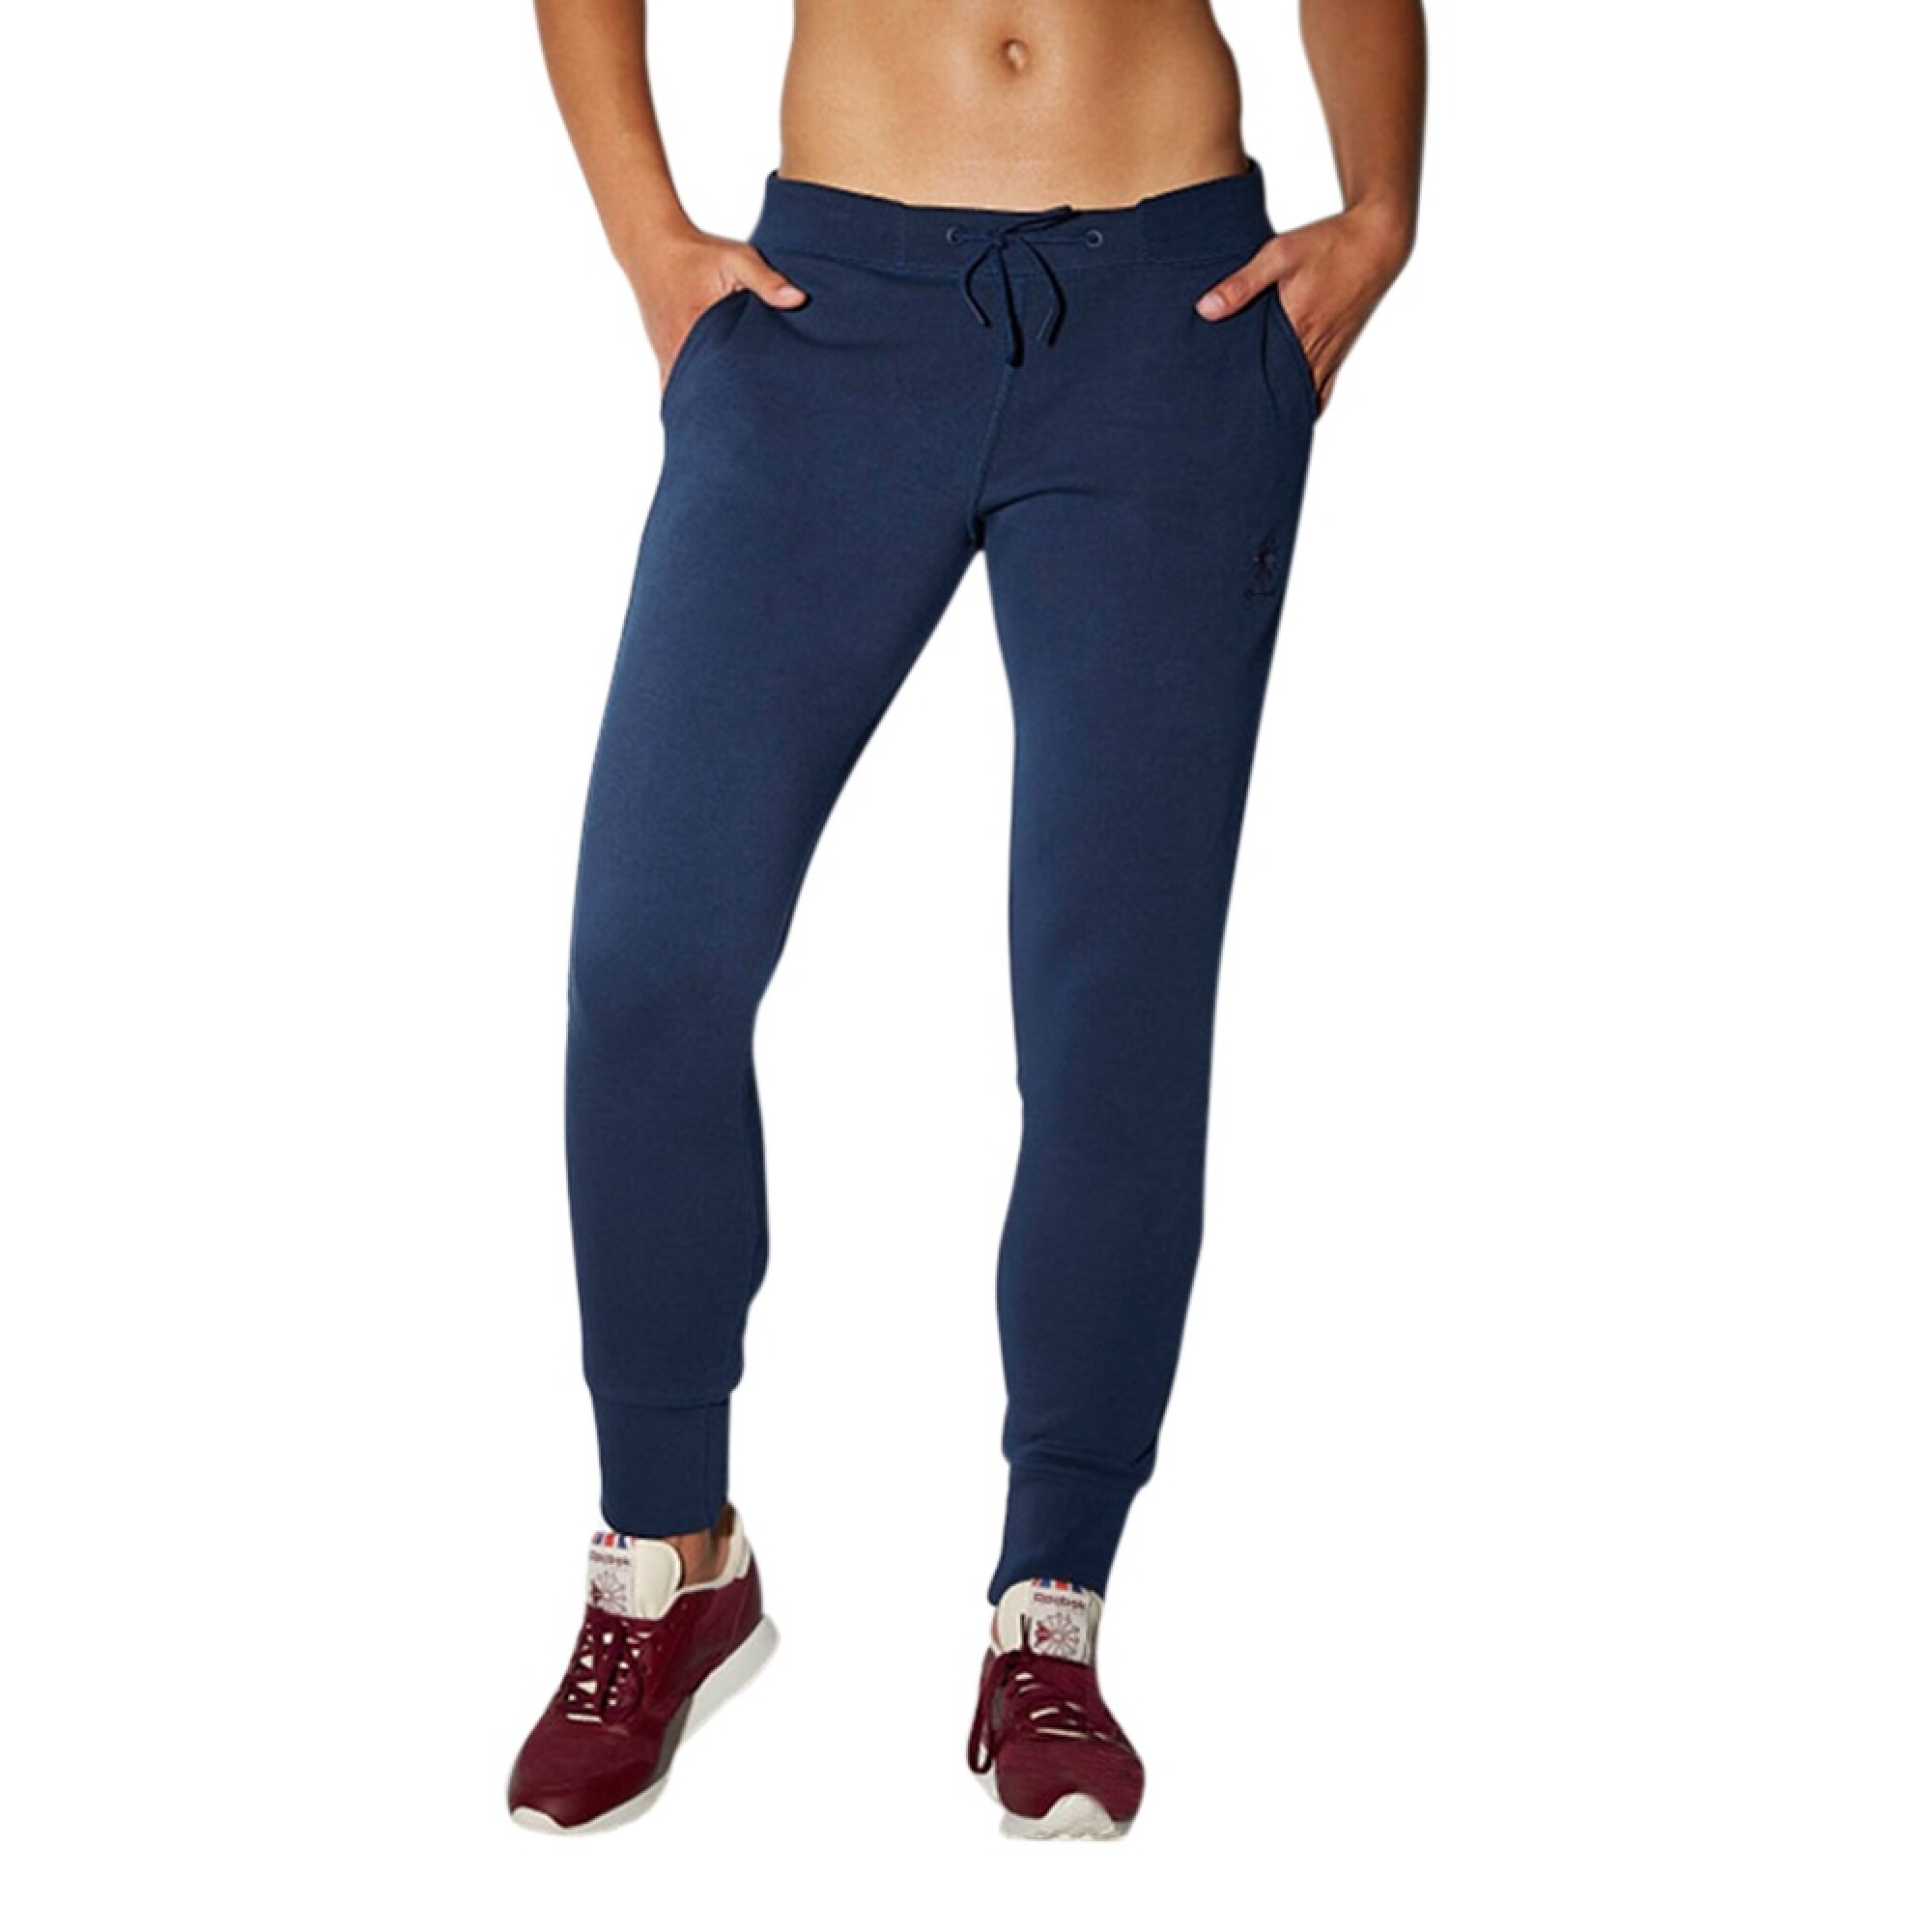 BLUEDREAMER pantalones cortos deportivos para mujer pantalones de